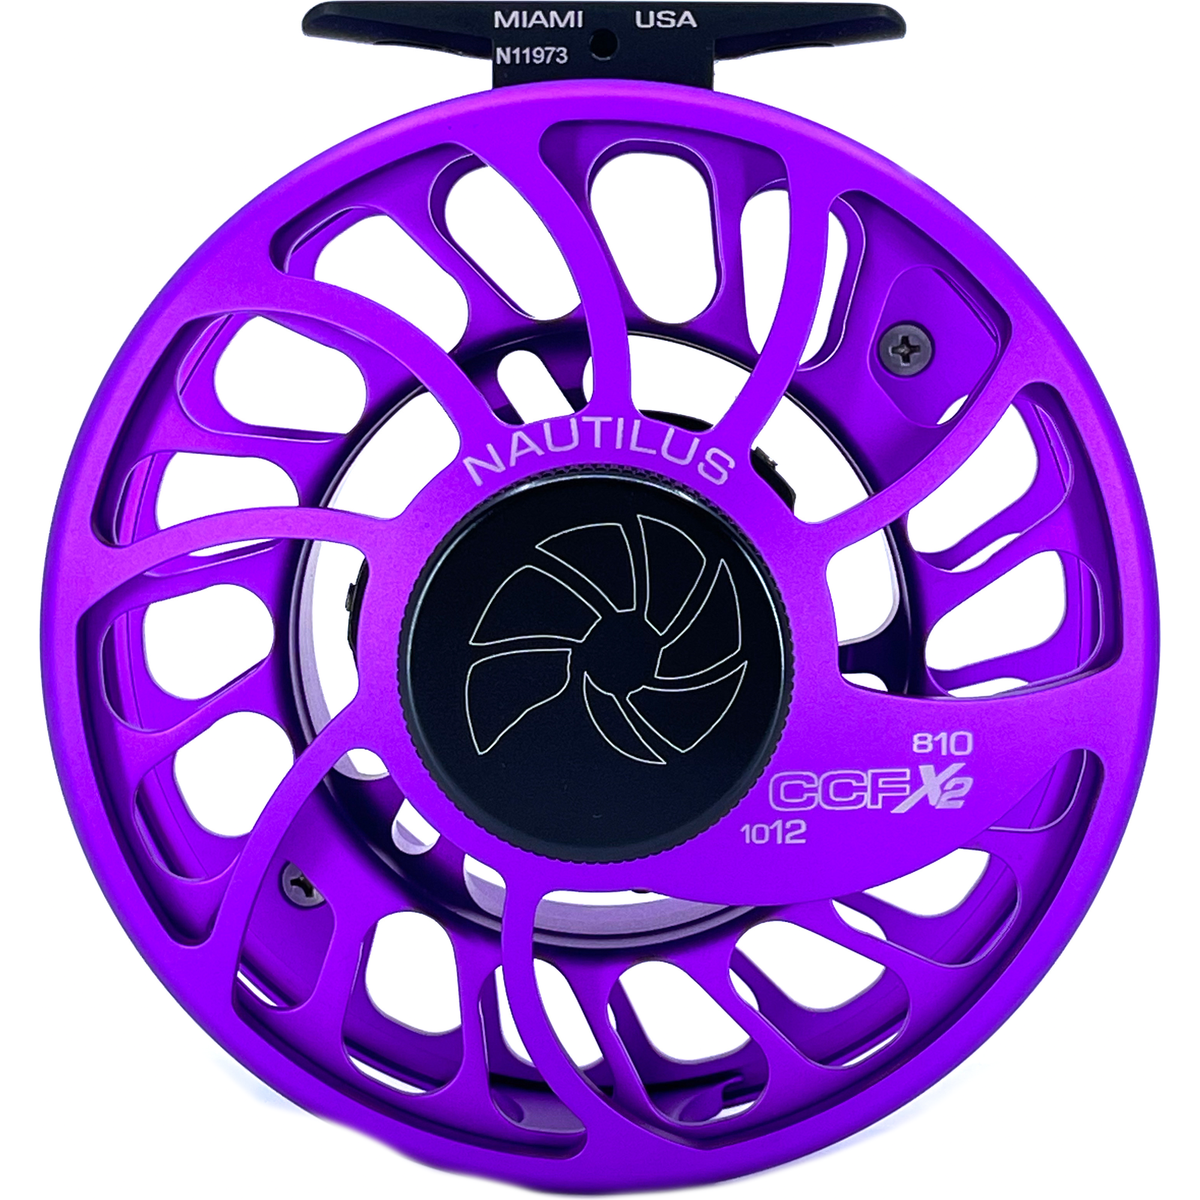 Nautilus - CCF X2 - 10/12 - Purple Haze (CUSTOM IN STOCK) - 239 Flies